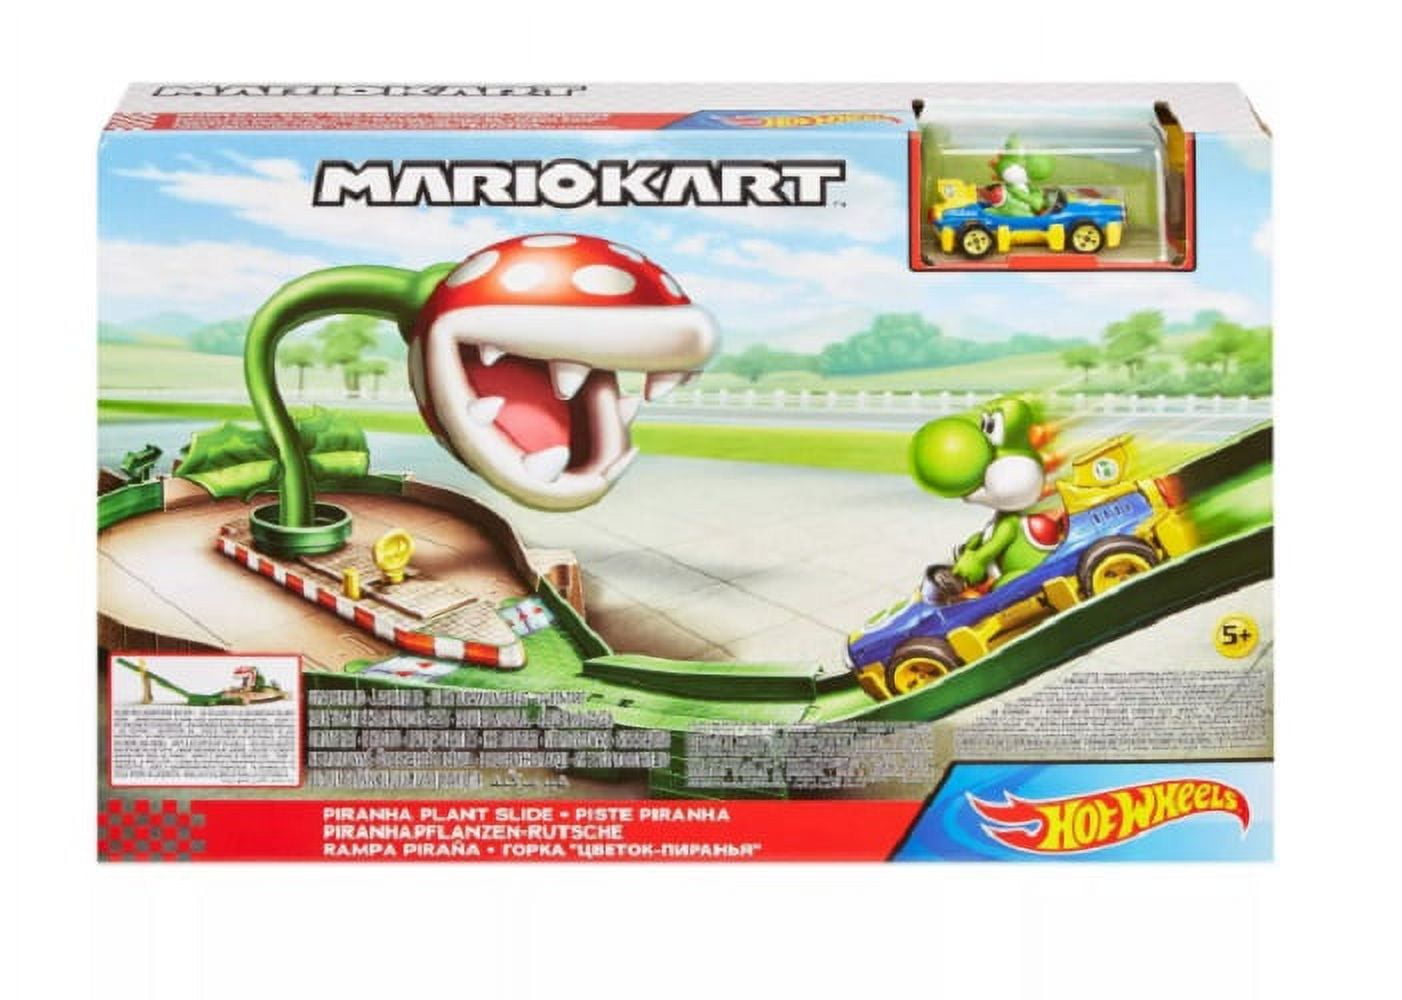 Hot Wheels Mario Kart Track Set - Piranha Plant Slide Track with Mario Kart  Vehicle and Nemesis 